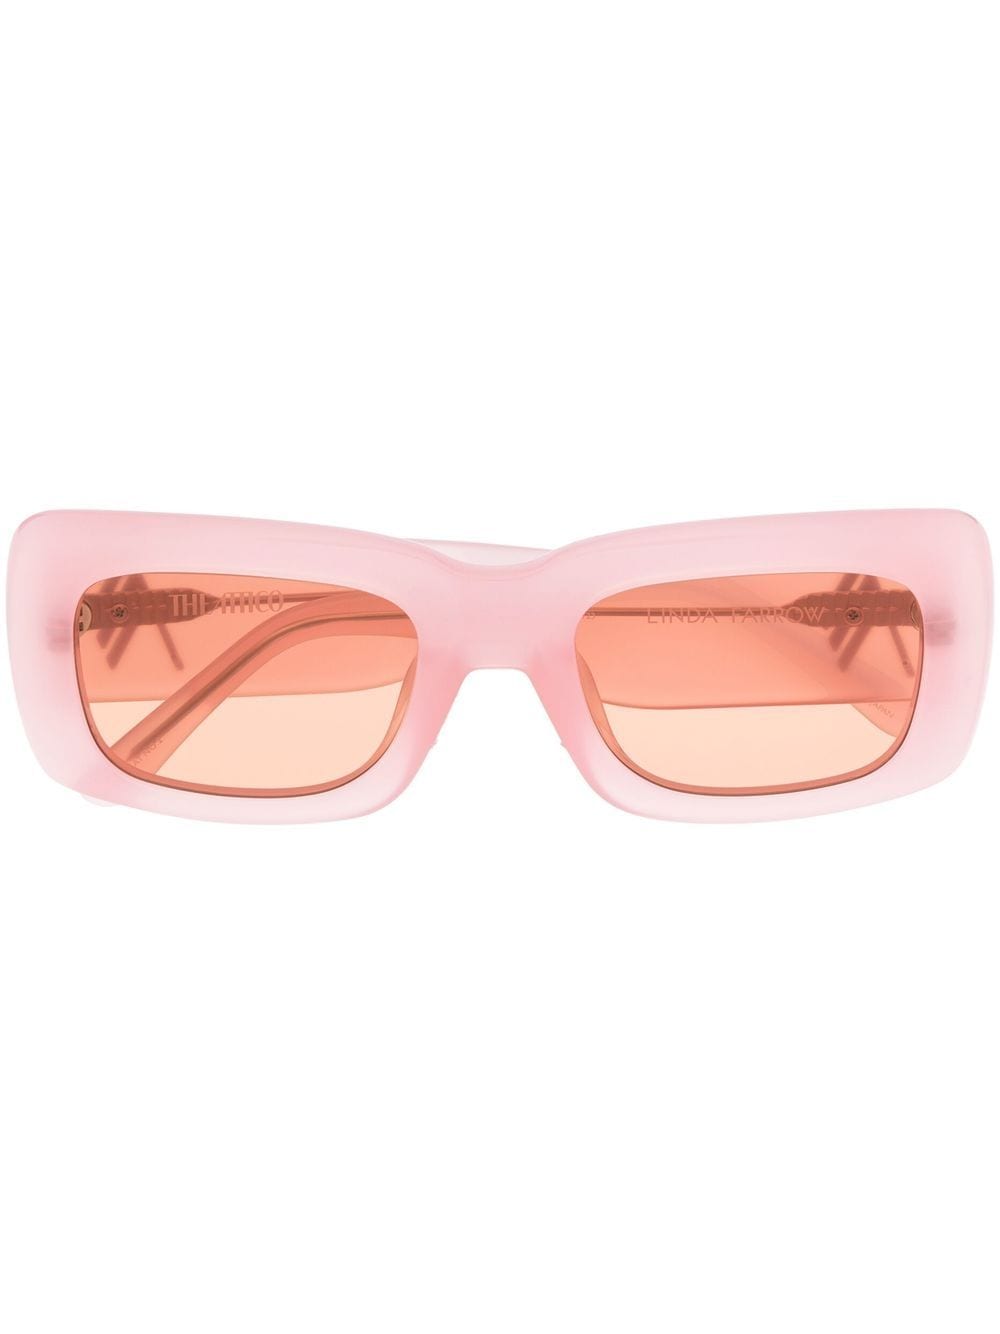 Occhiali da sole trasparenti in rosa - donna